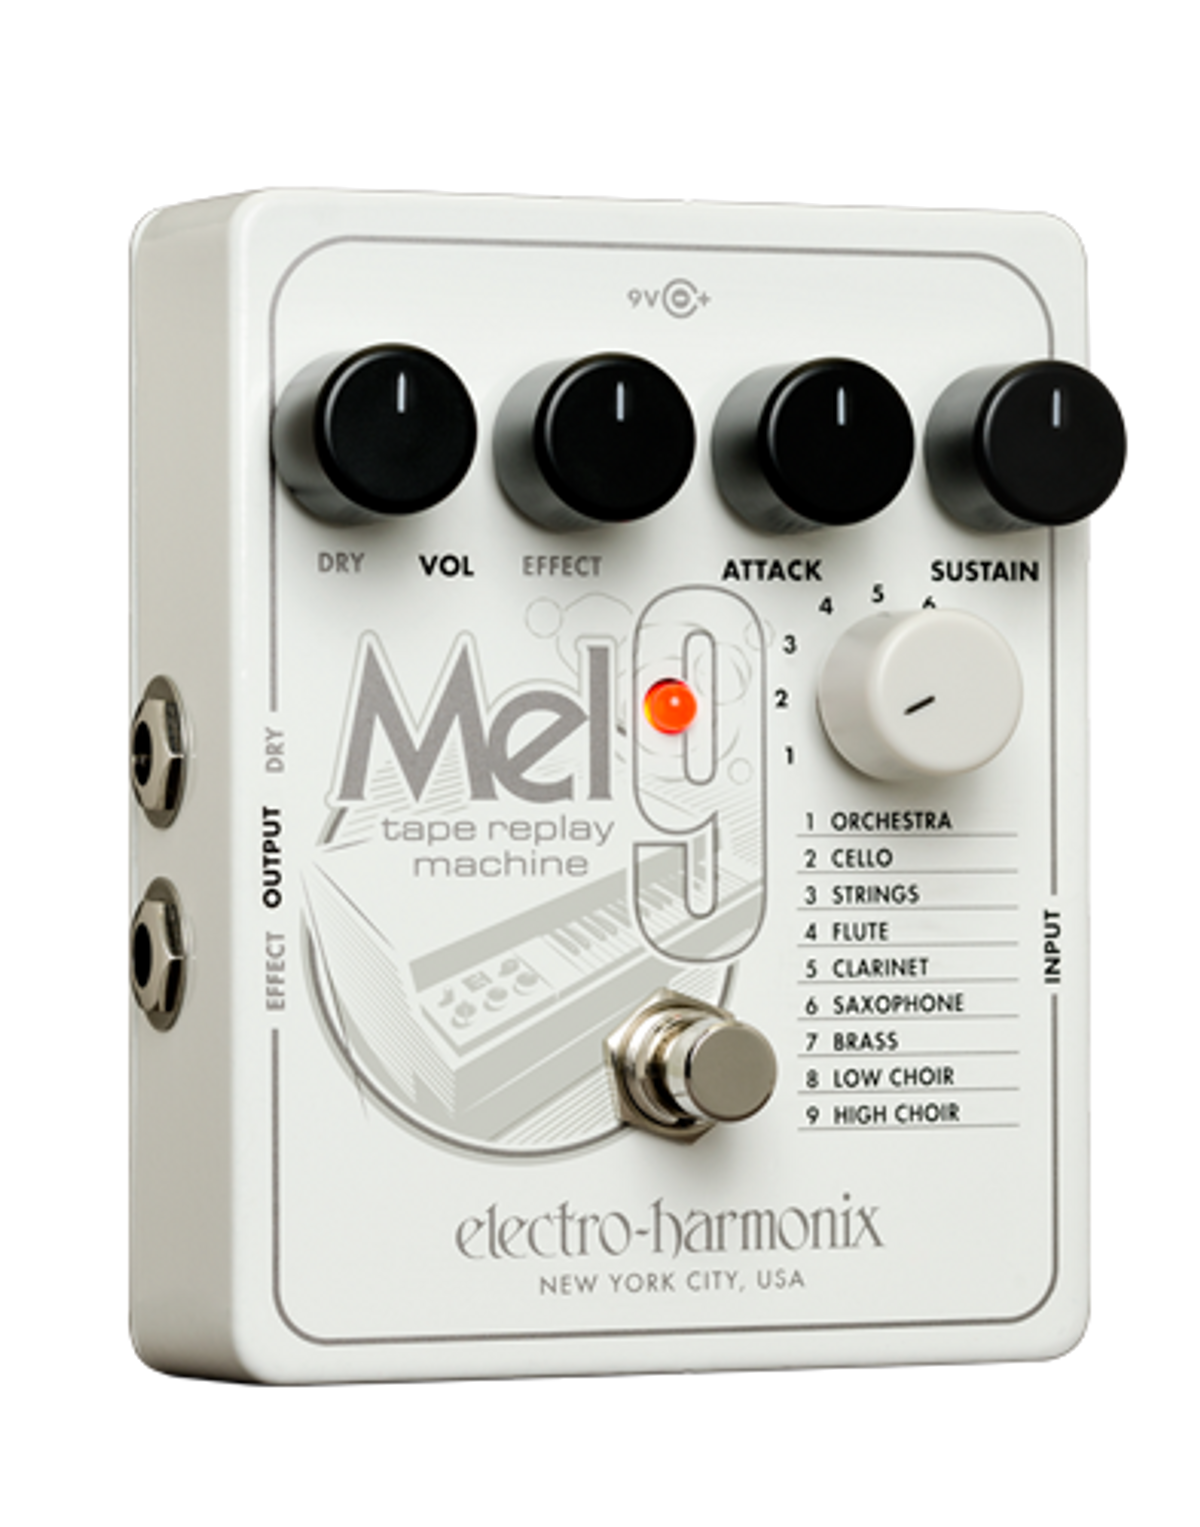 Electro-Harmonix Introduces the Mel9 Tape Replay Machine